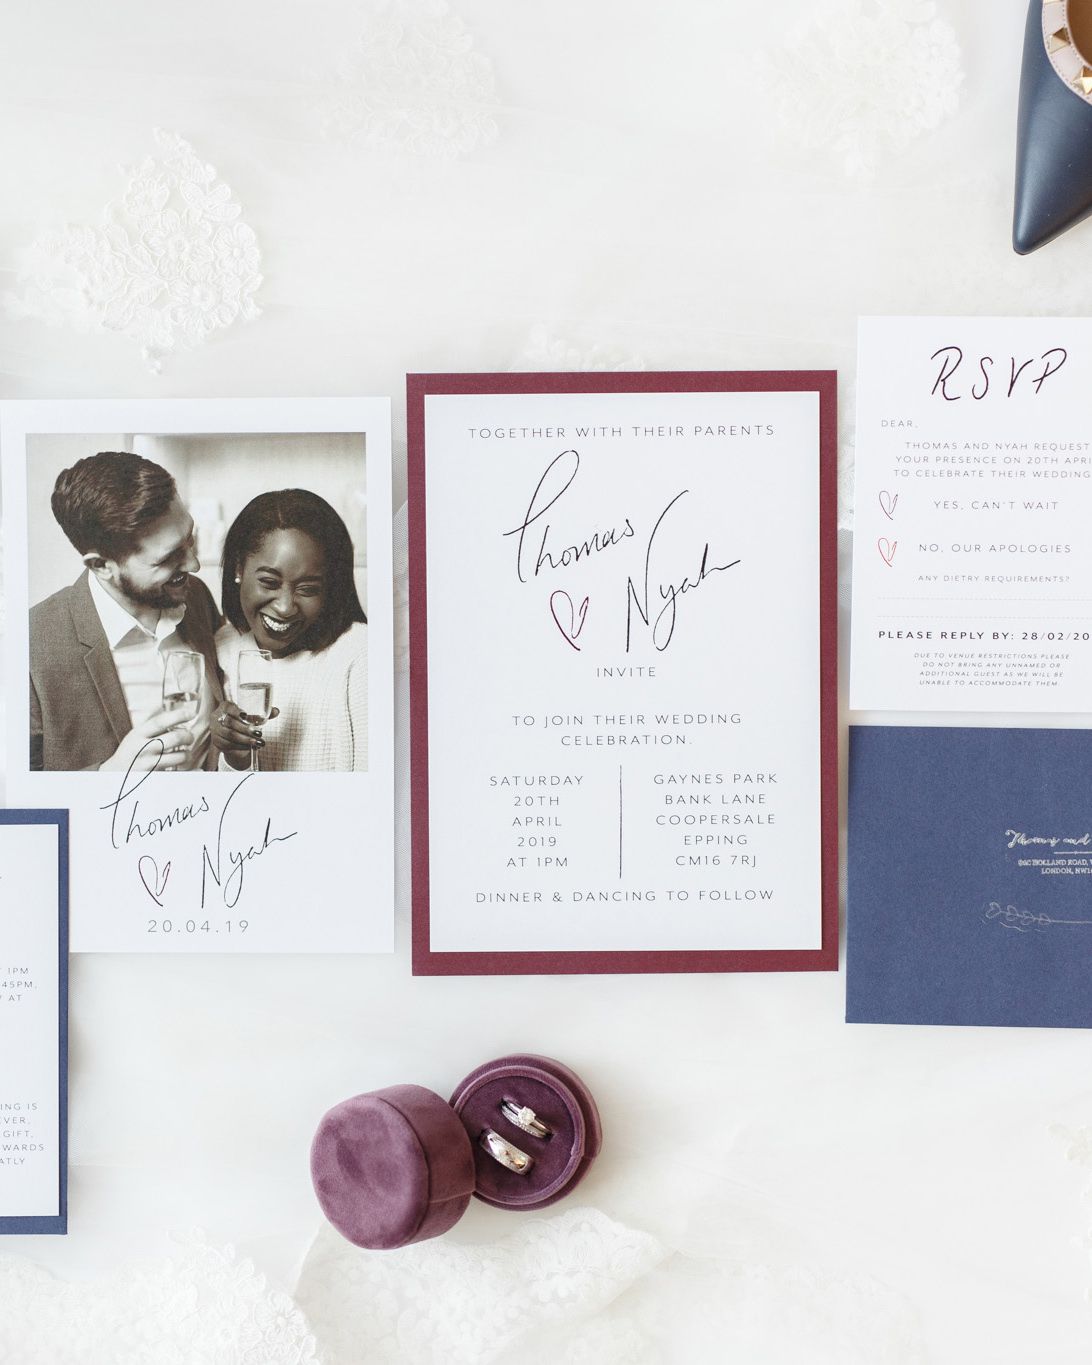 ryan thomas wedding invites in white, purple, and navy